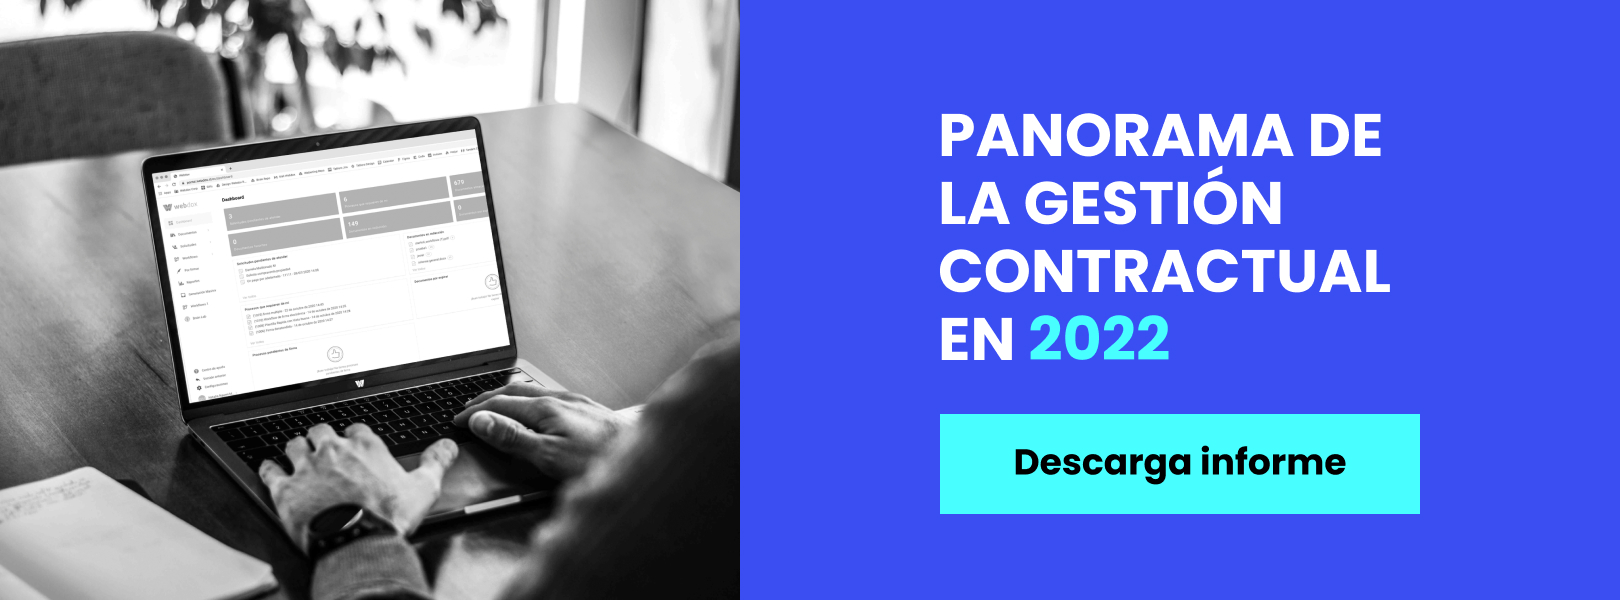 webdox-panorama-gestion-contractual-2022